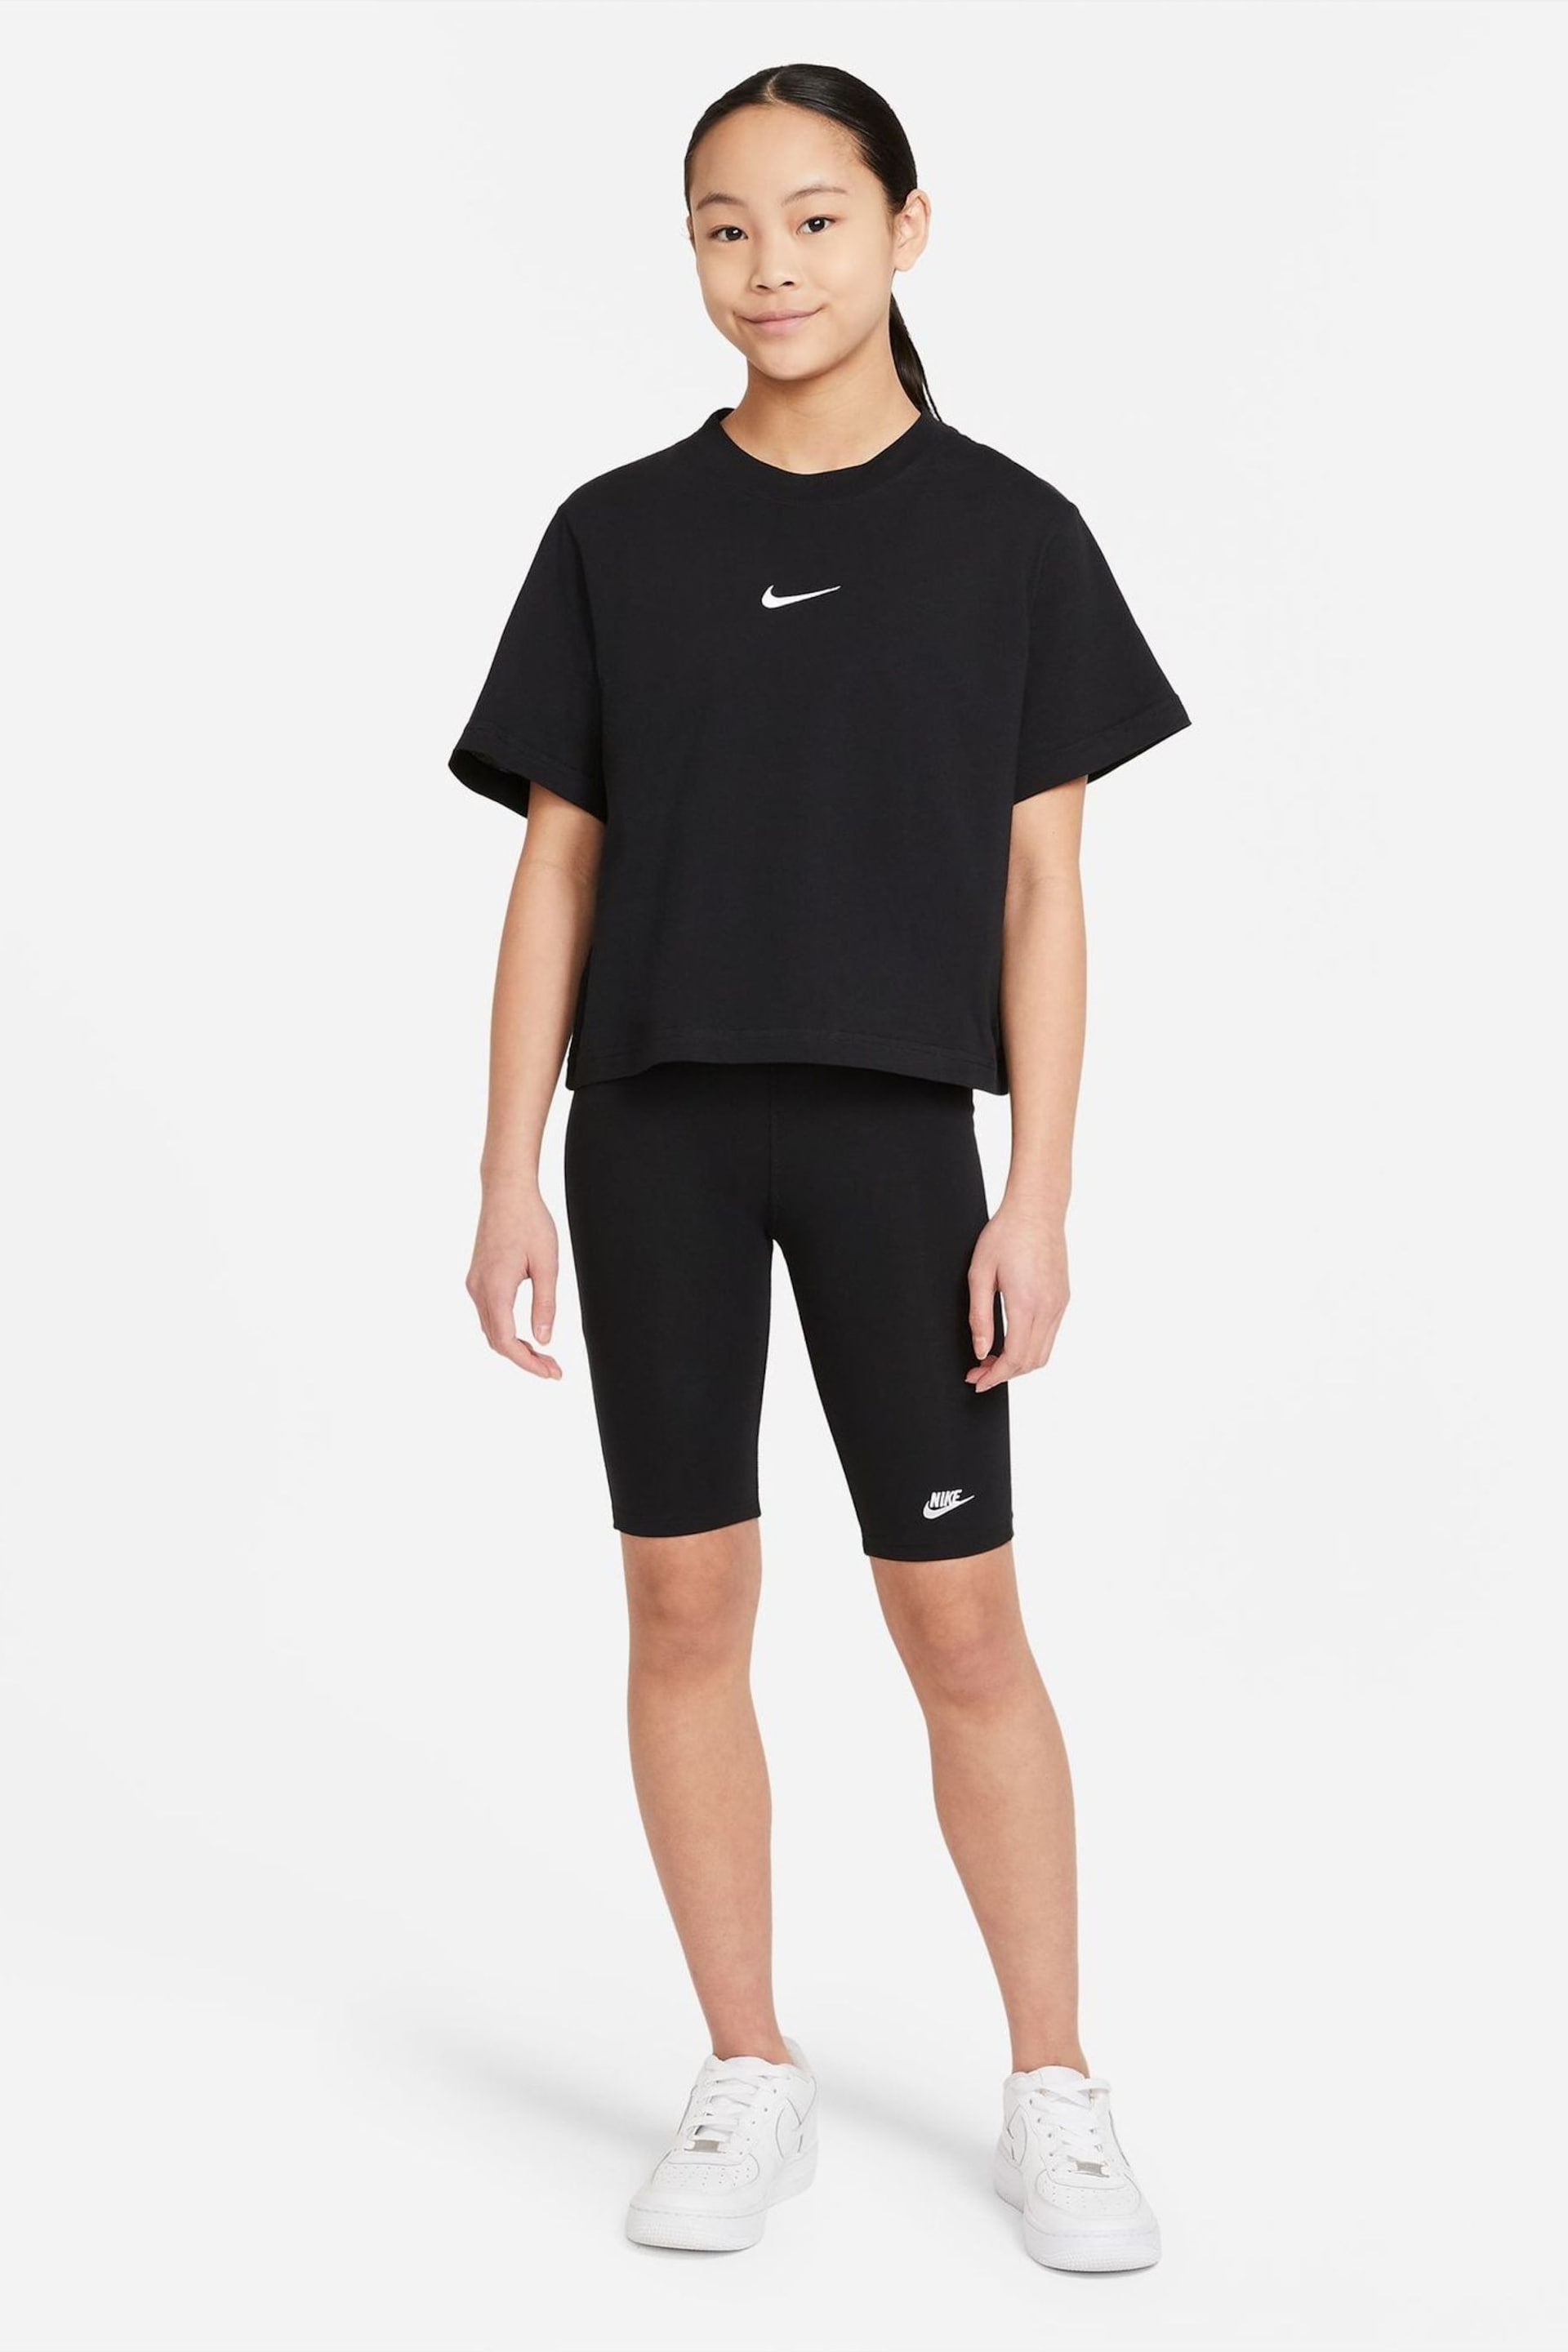 Nike Black Oversized Essentials Boxy T-Shirt - Image 3 of 4